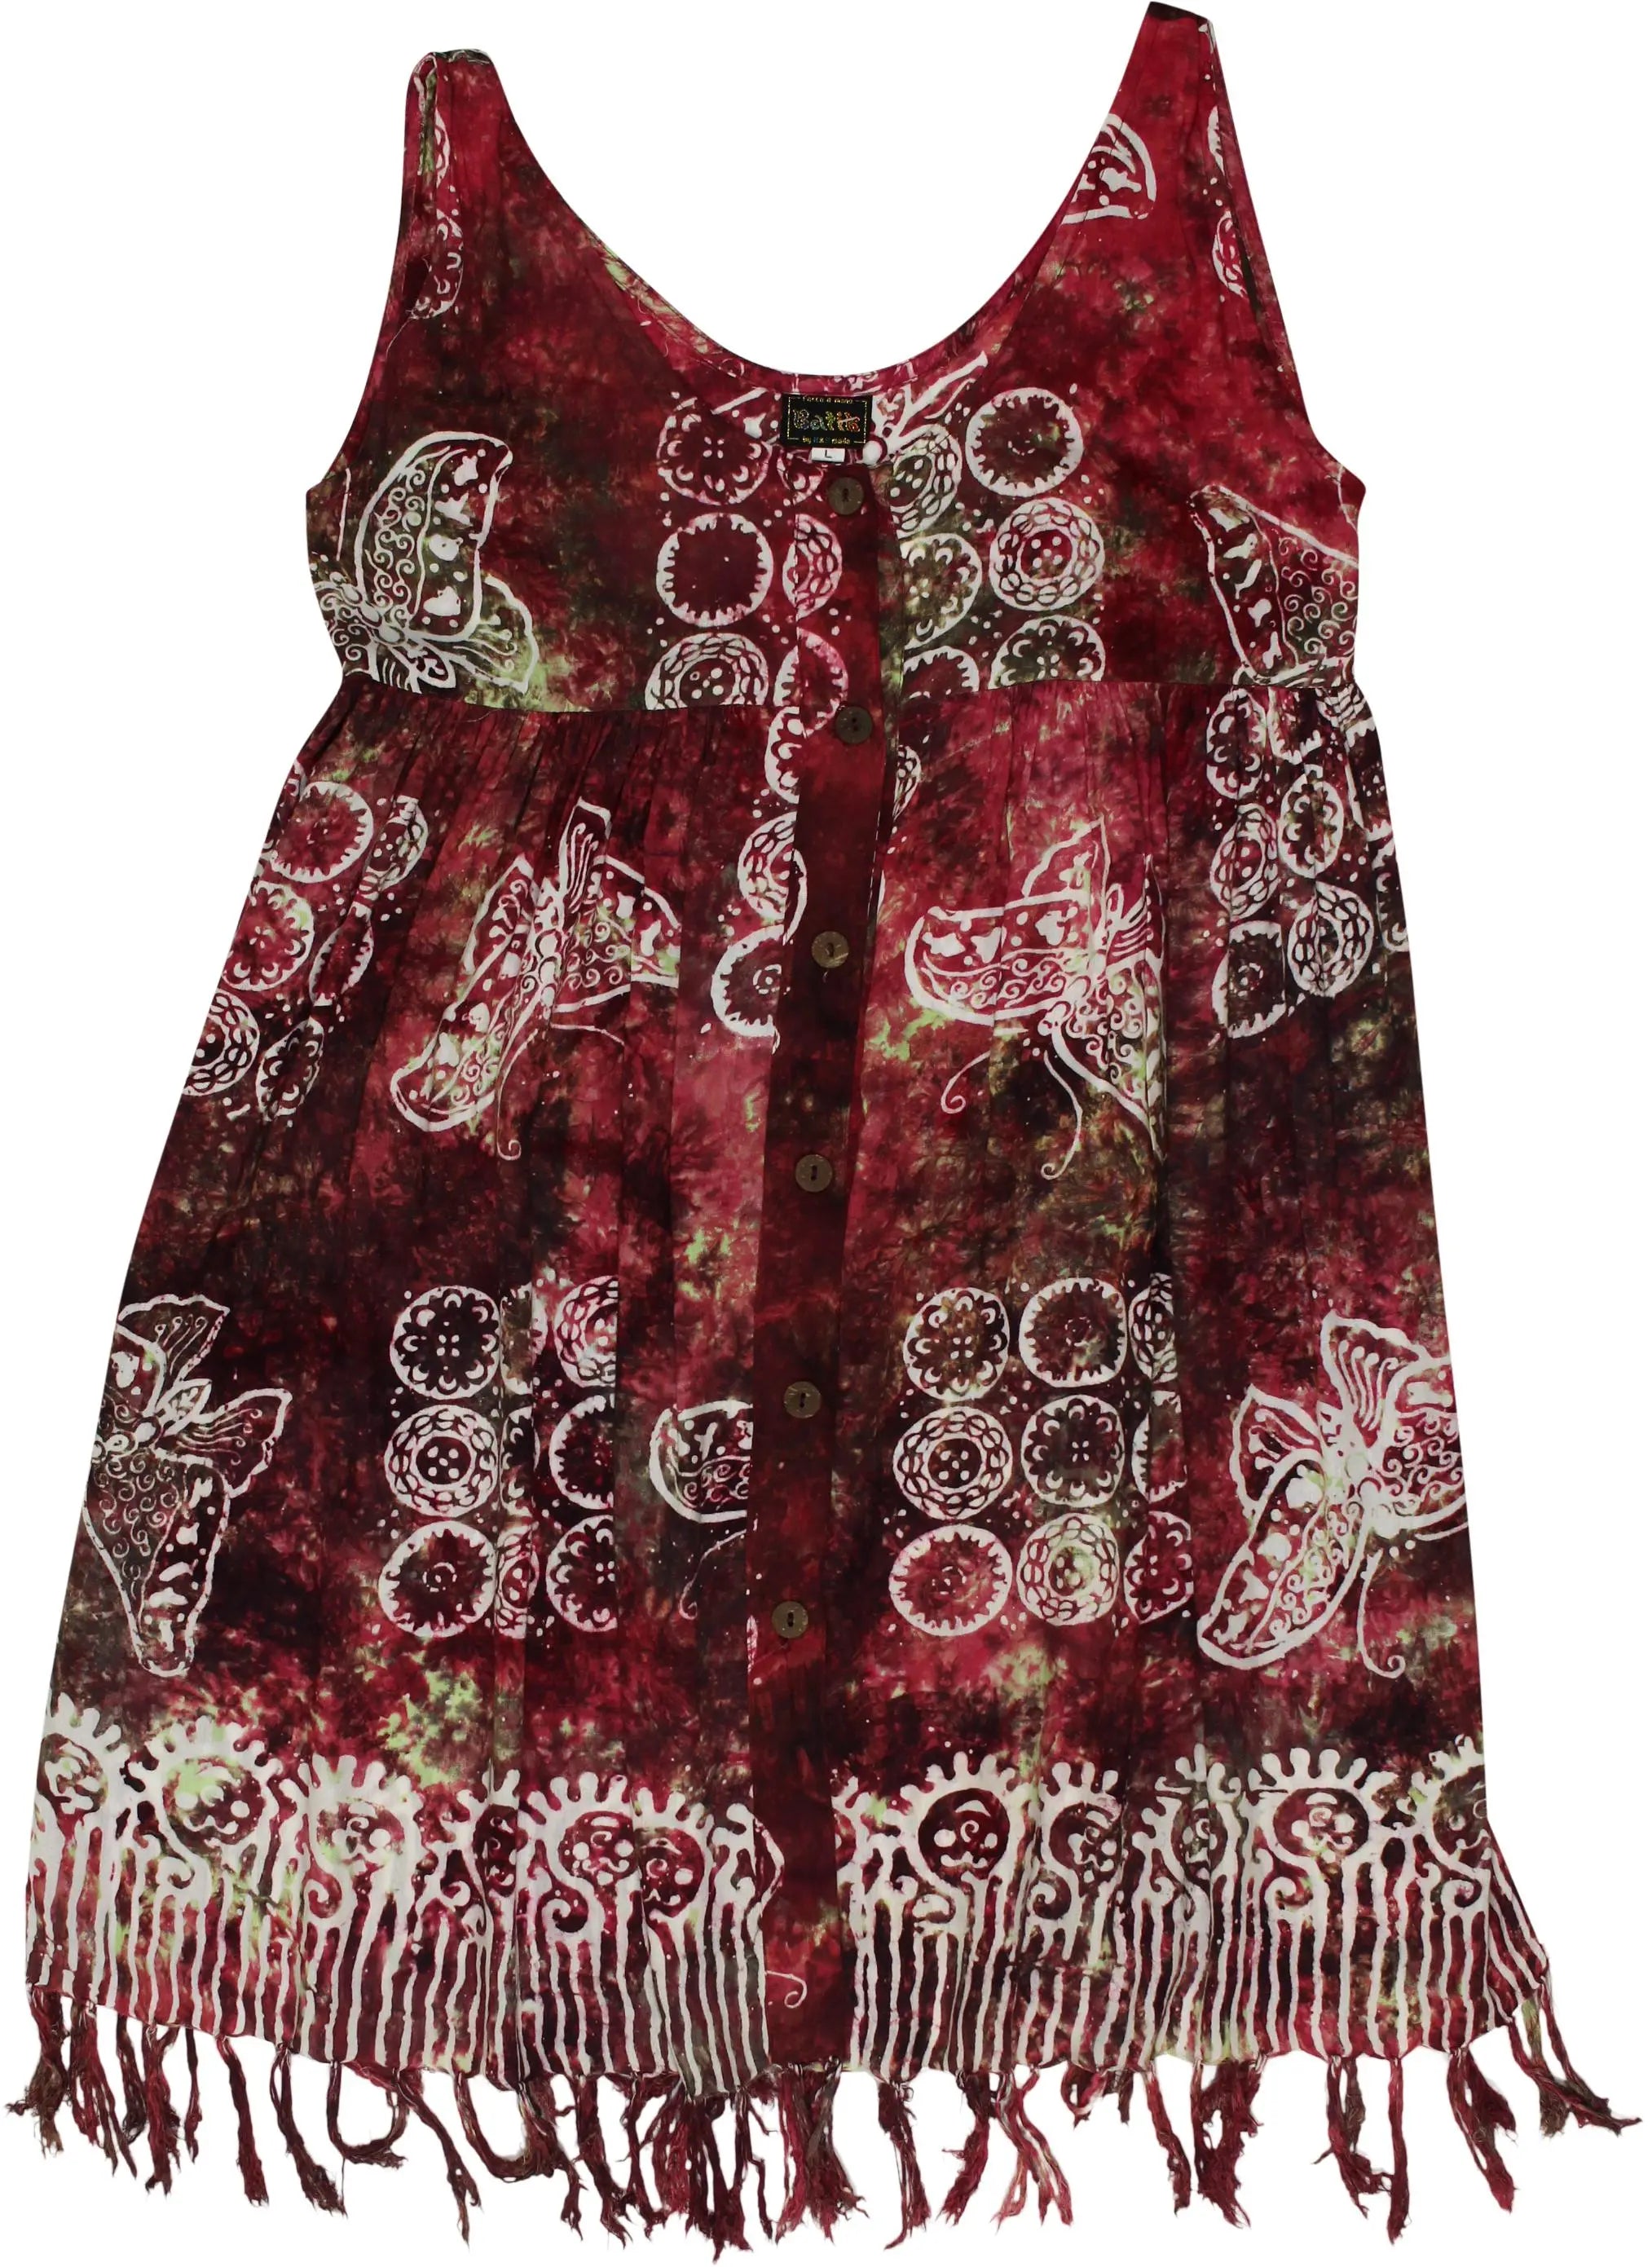 Batik - Batik Dress- ThriftTale.com - Vintage and second handclothing